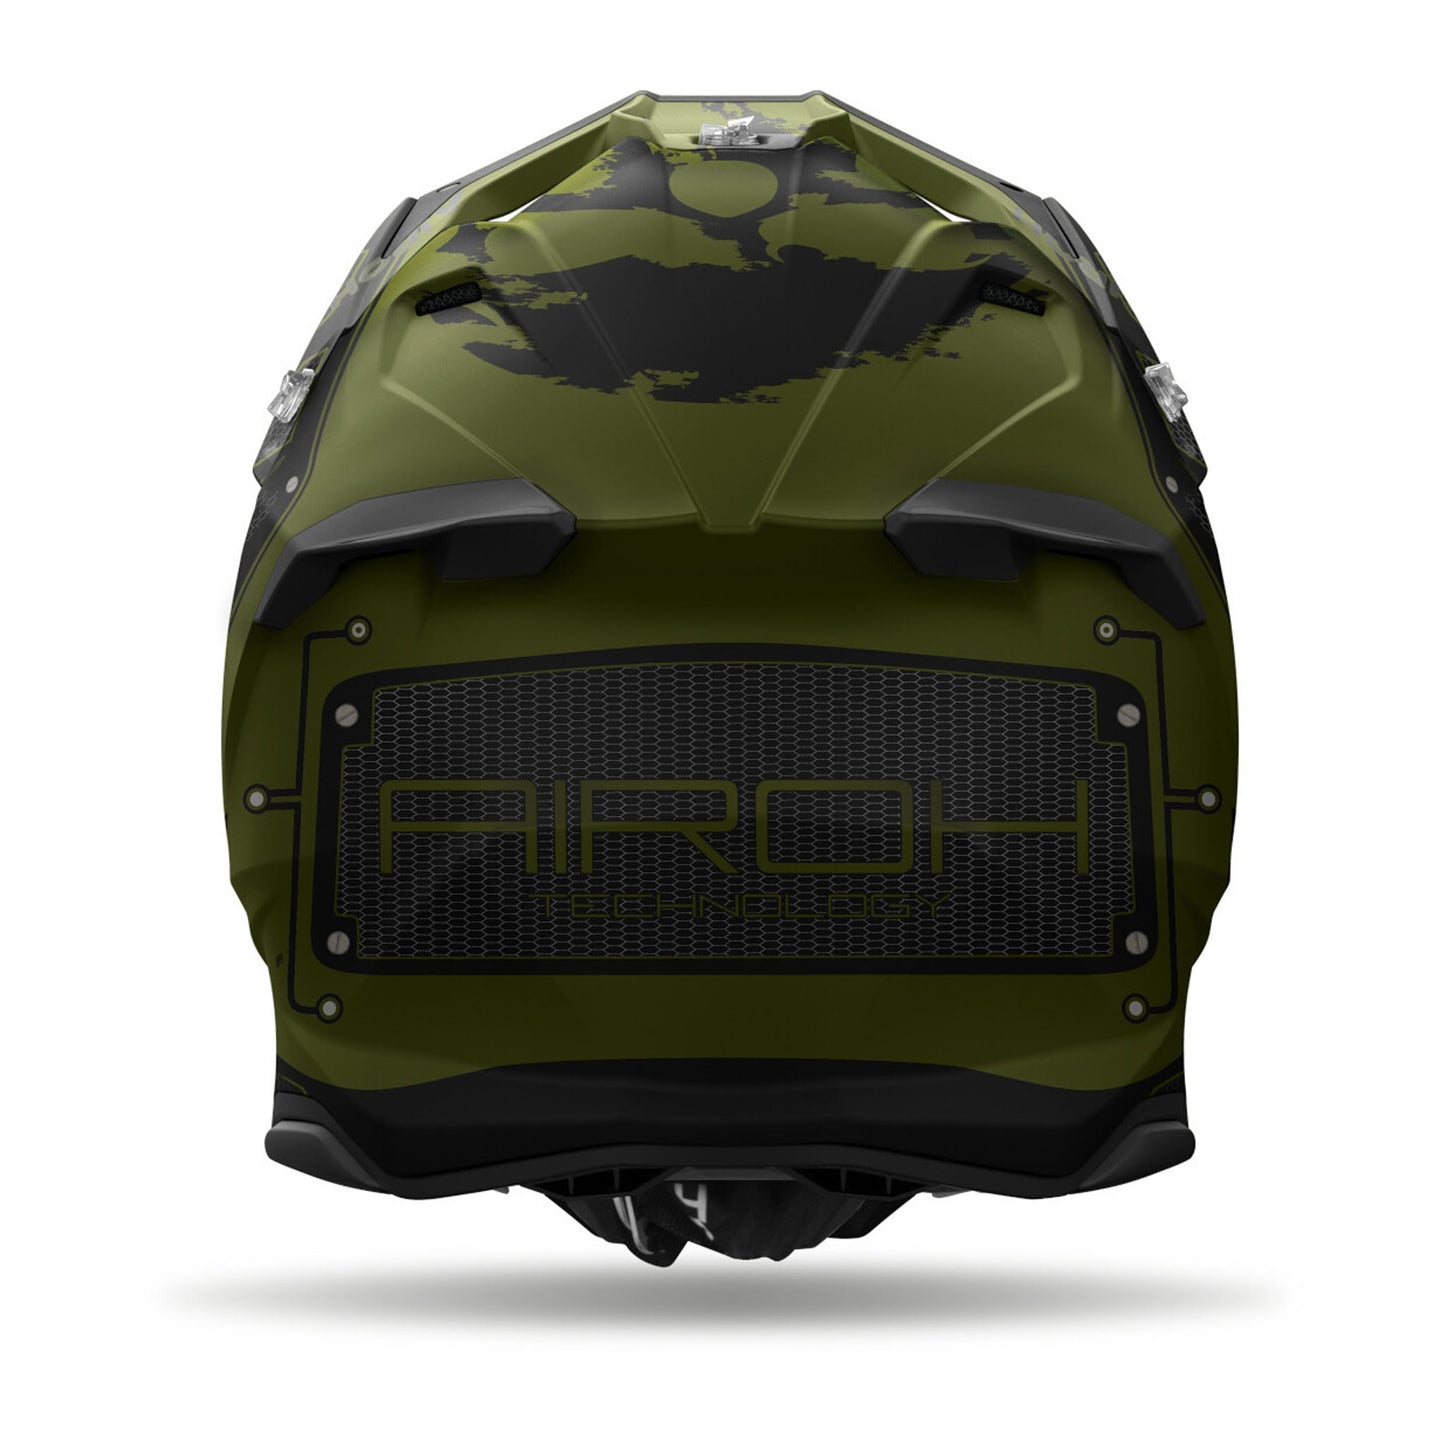 Airoh Twist 3 Military Helmet (Matte)